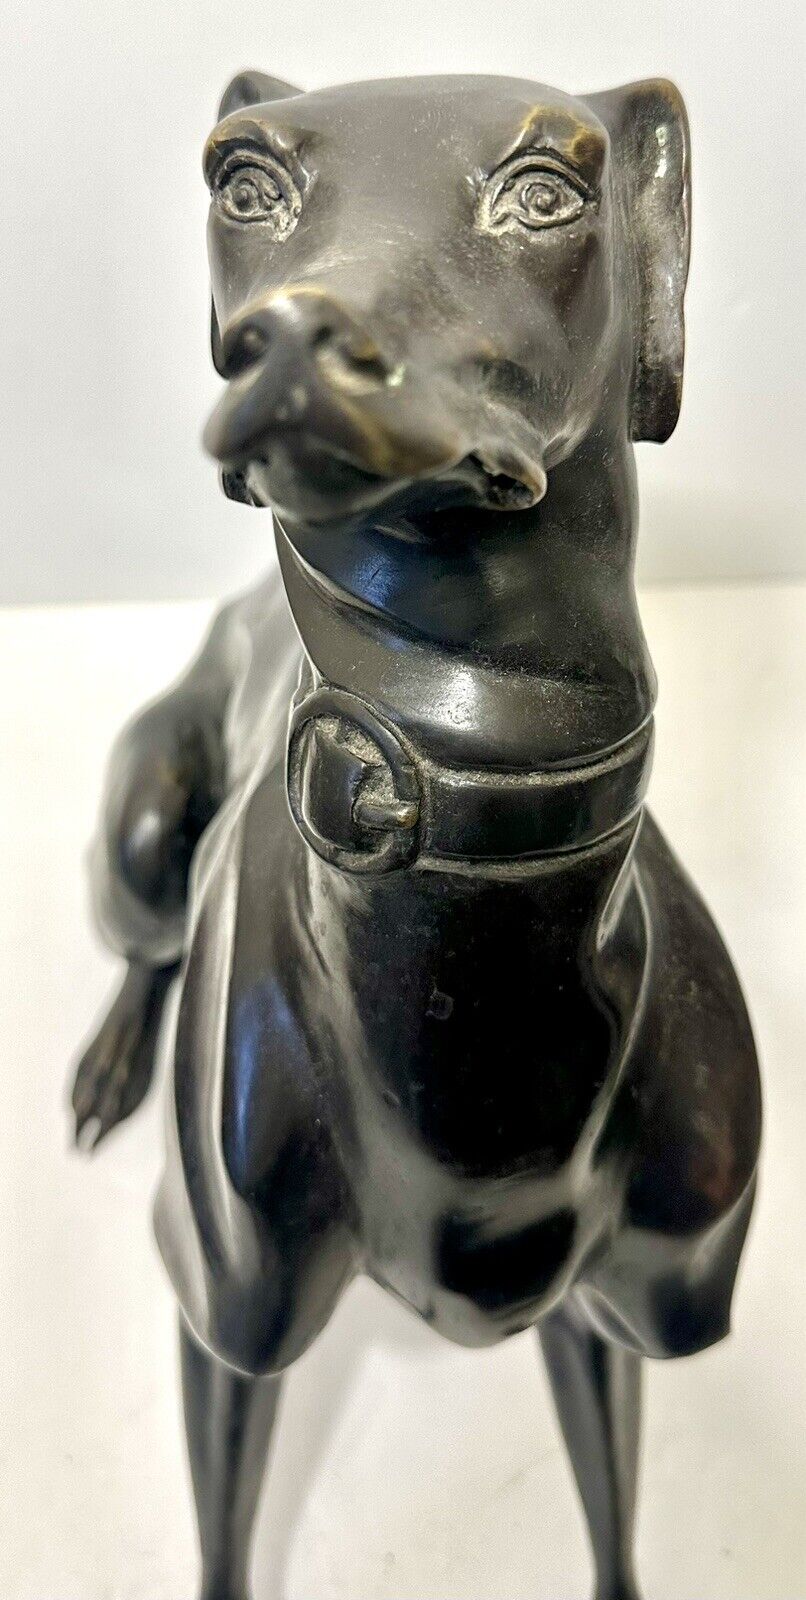 Vintage Handmade Handcrafted Brown Iron Cast Full Figure Dog Sculpture Figurine